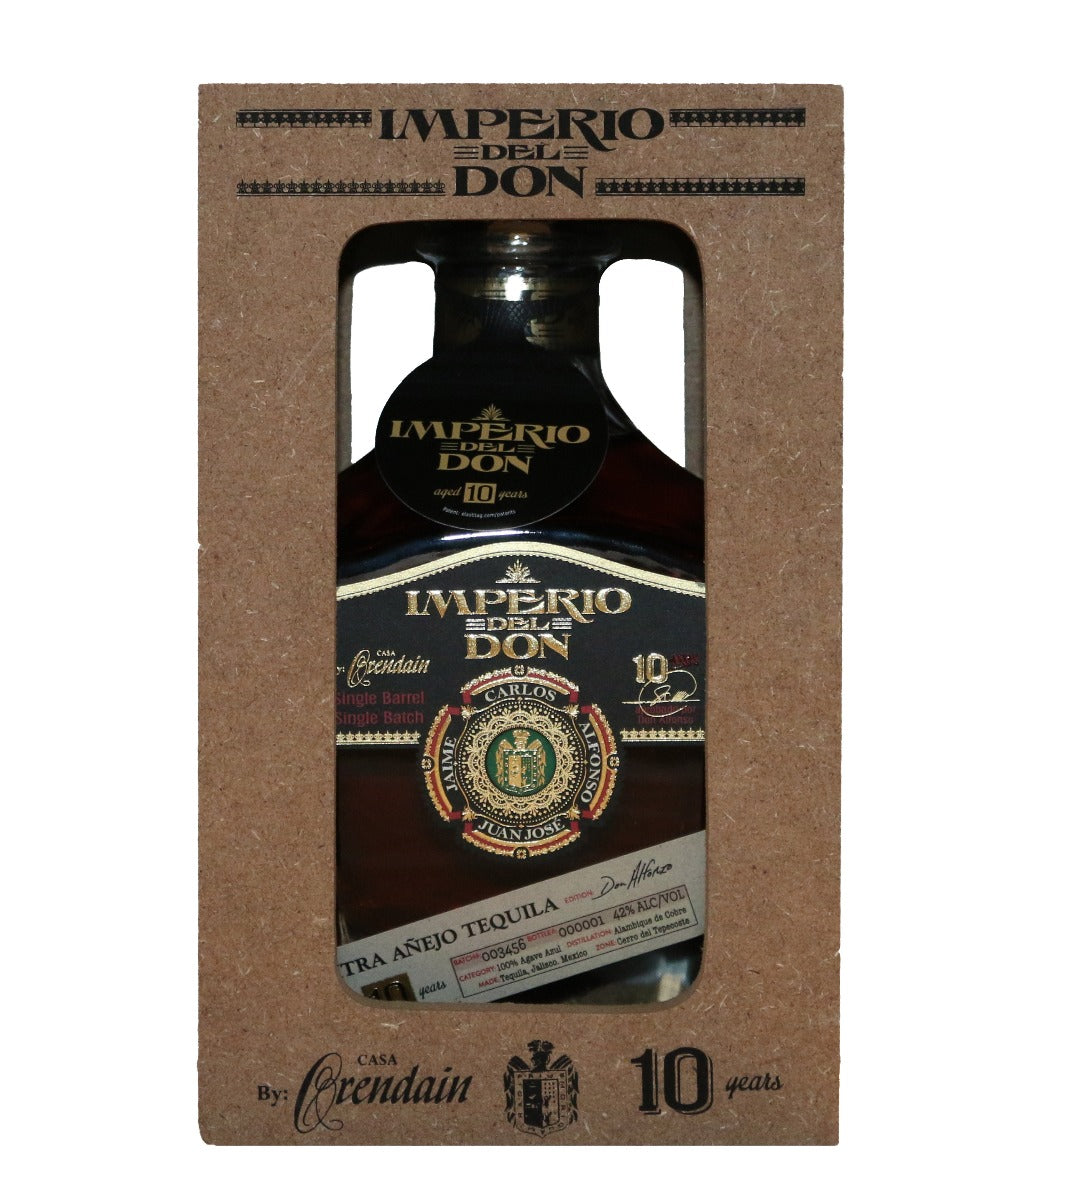 IMPERIO DEL DON TEQUILA EXTRA ANEJO SINGLE BARREL 10YR 750ML - Remedy Liquor